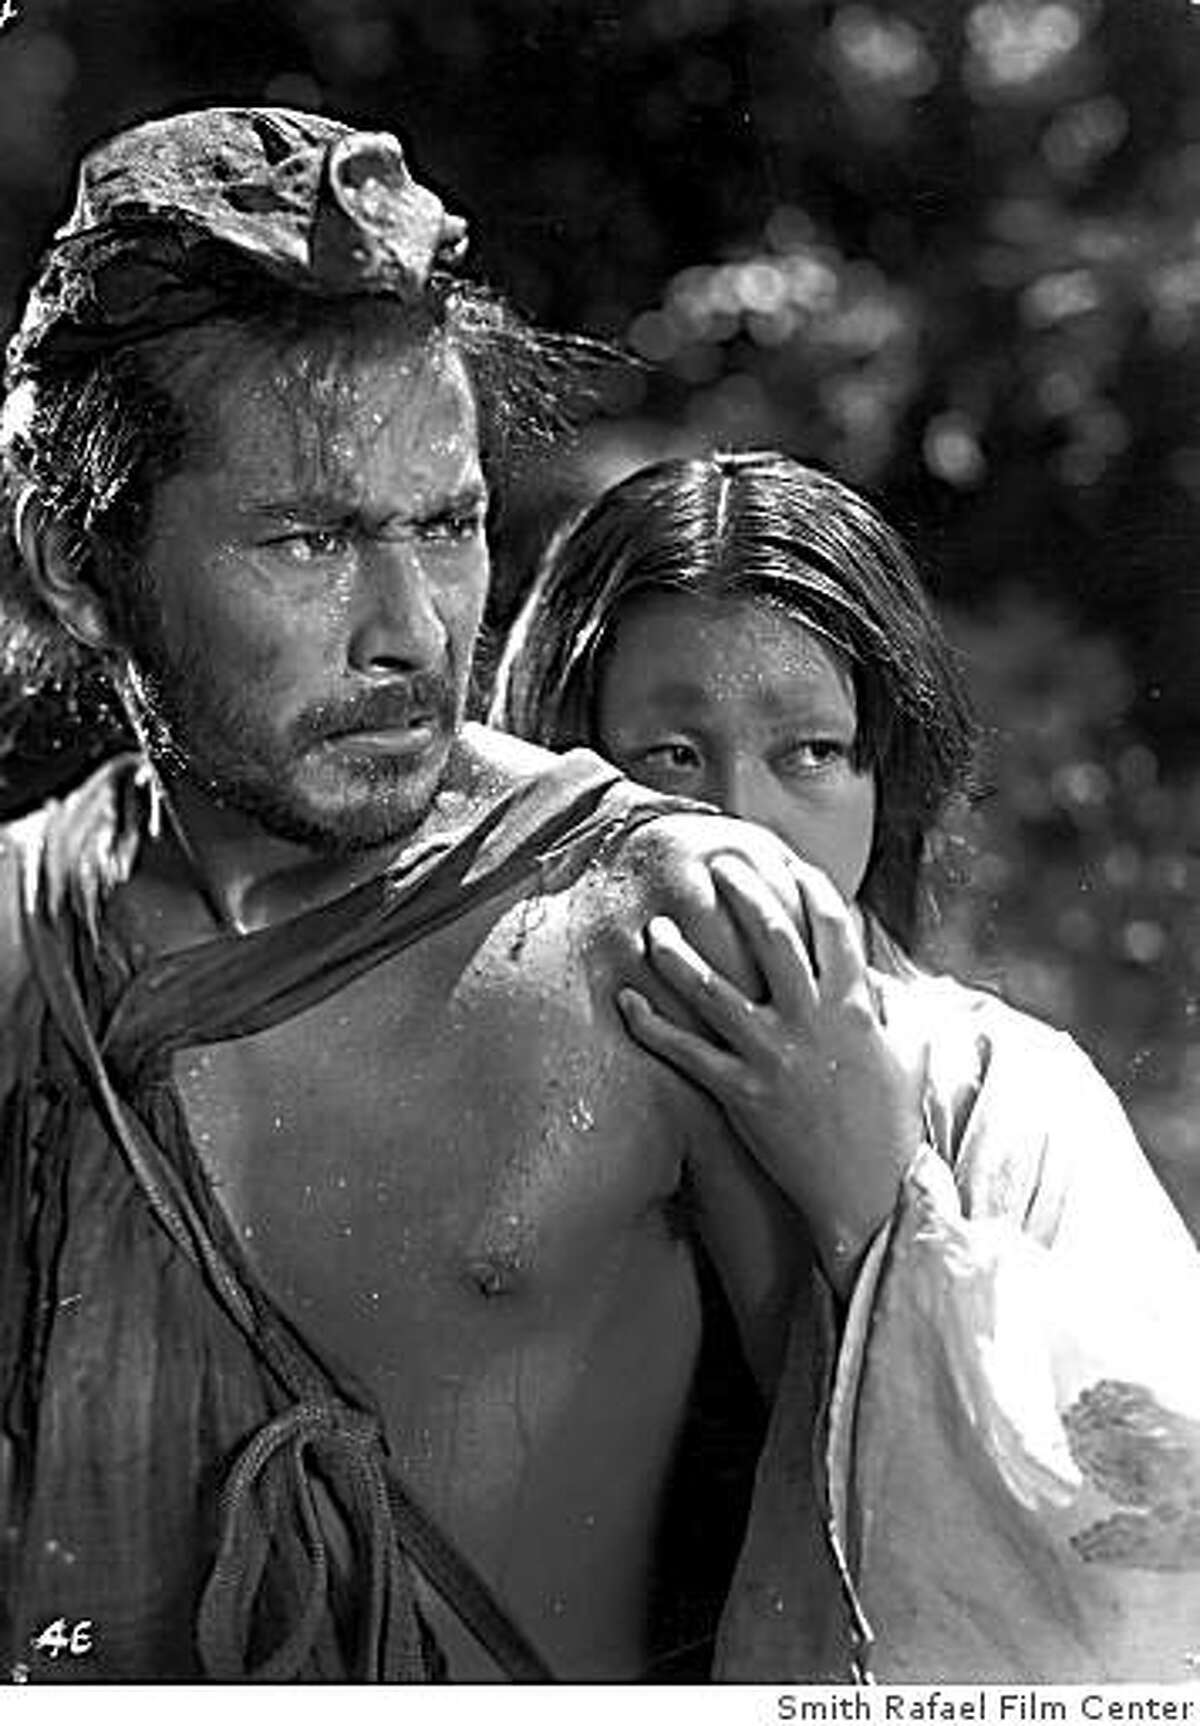 A 35mm film print of Akira Kurosawa's 1950 film "Rashomon" will be screened on Friday Dec 5 and Saturday Dec 6 as part of "Essential Art House: Four Treasures from Janus Films" at Smith Rafael Film Center in San Rafael.